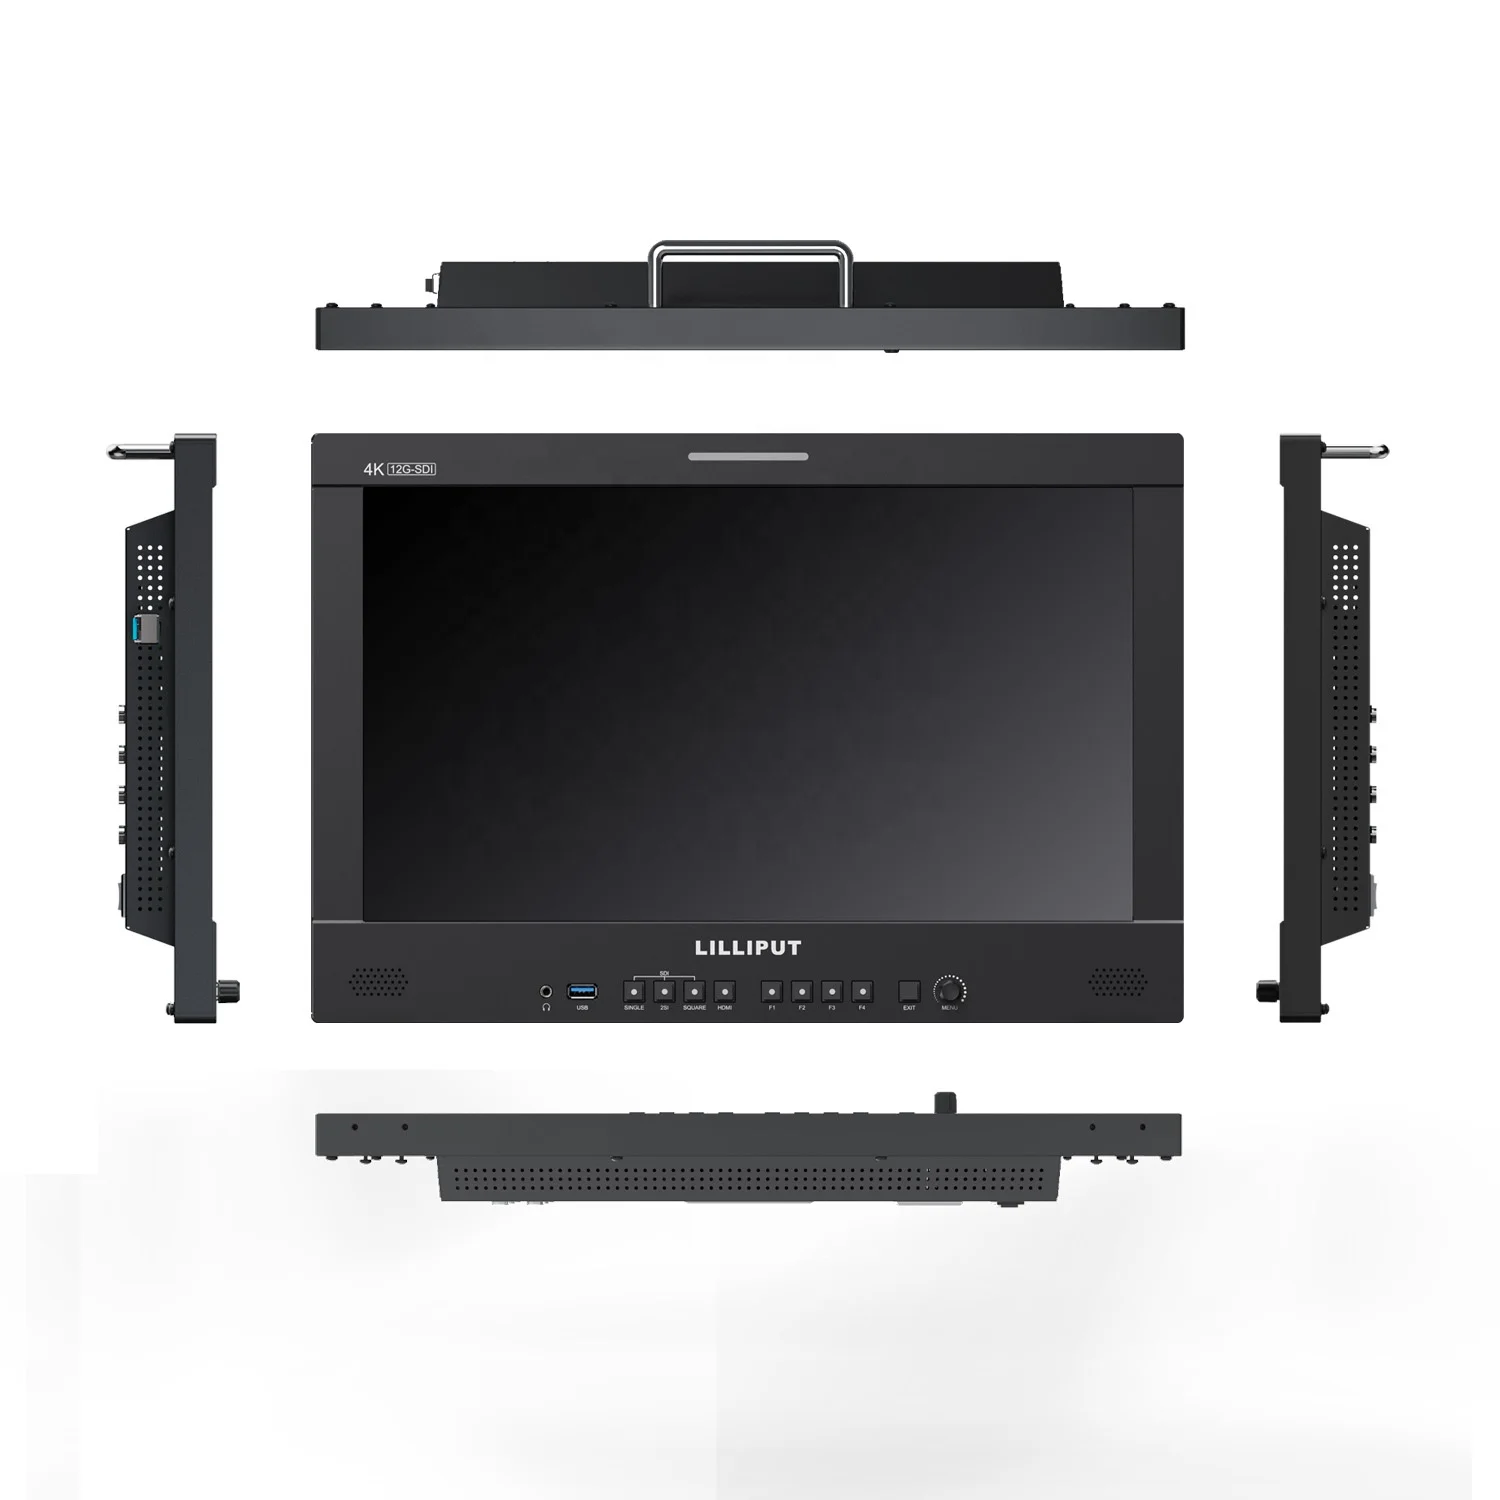 Lilliput Q18 17.3 inch 4K 12G-SDI HDMI Quad View Monitor with 3D-LUT, HDR,Gammas,Remote Control ,Audio vector